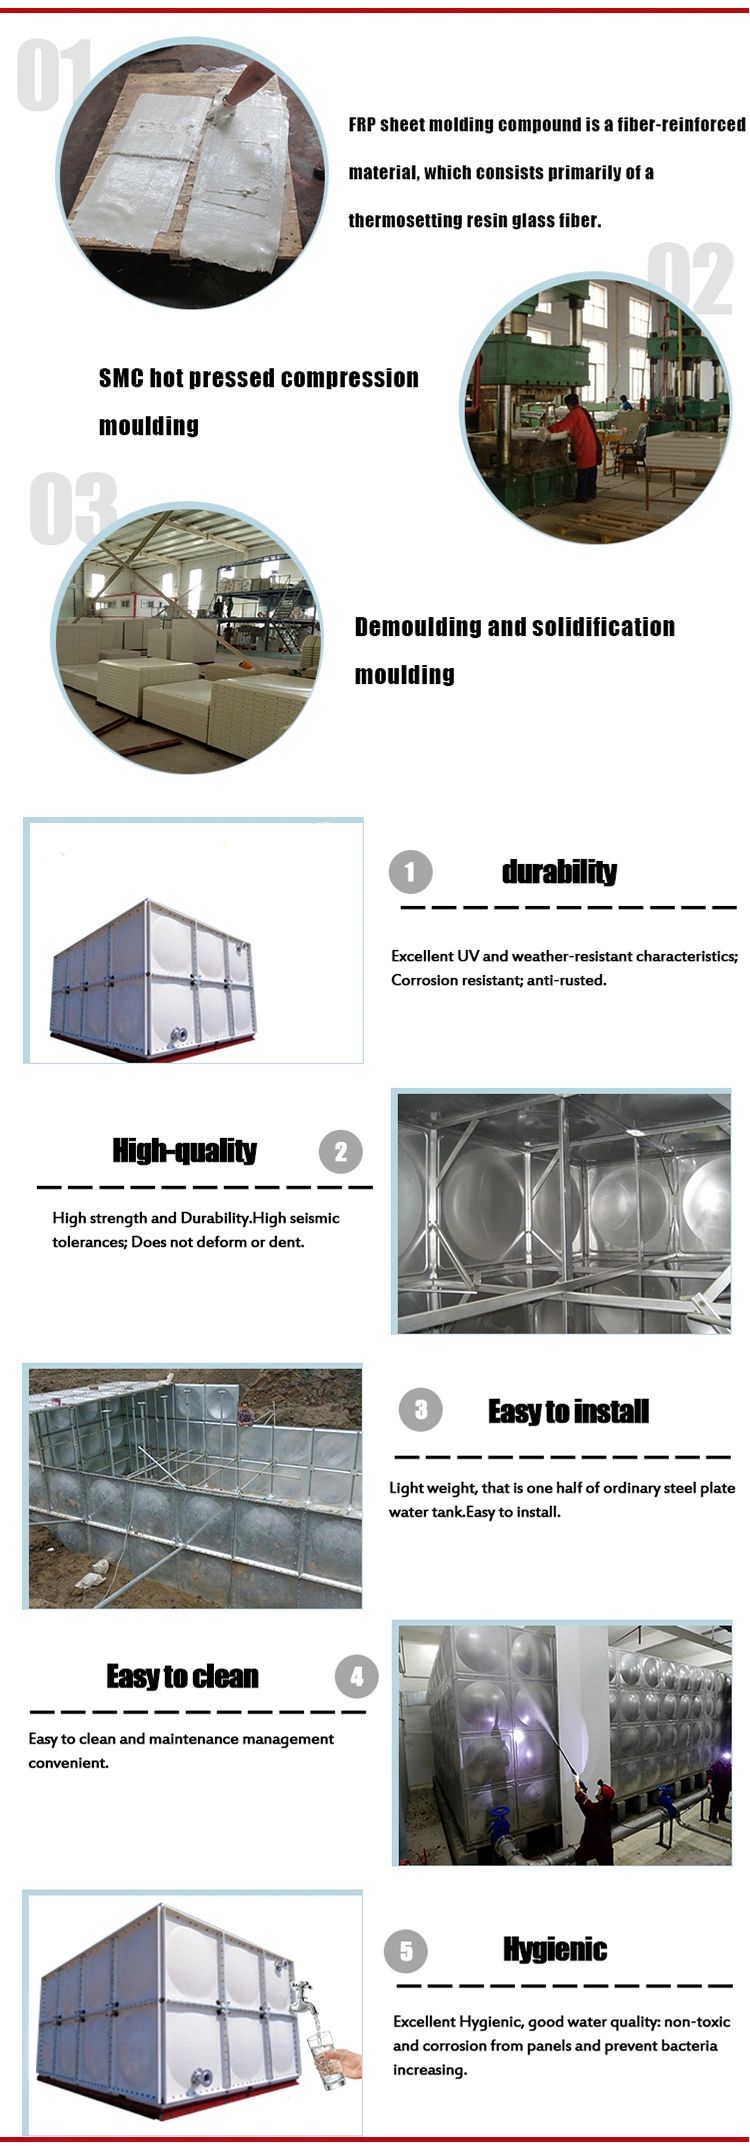 Modular Panels Combined Fribergalss FRP/GRP Water Storage Tank